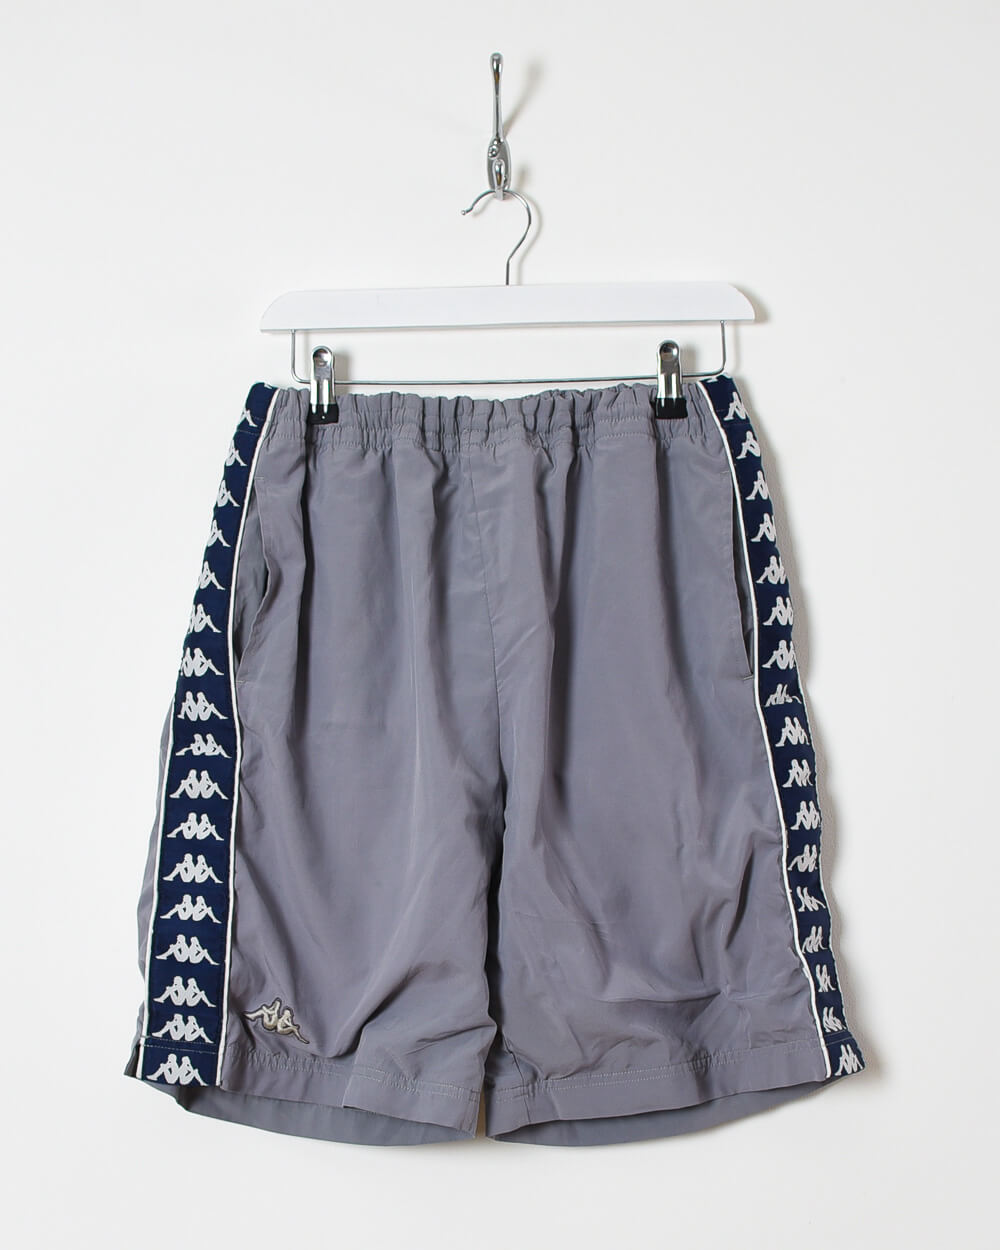 Kappa Swimwear Shorts - W30 - Domno Vintage 90s, 80s, 00s Retro and Vintage Clothing 